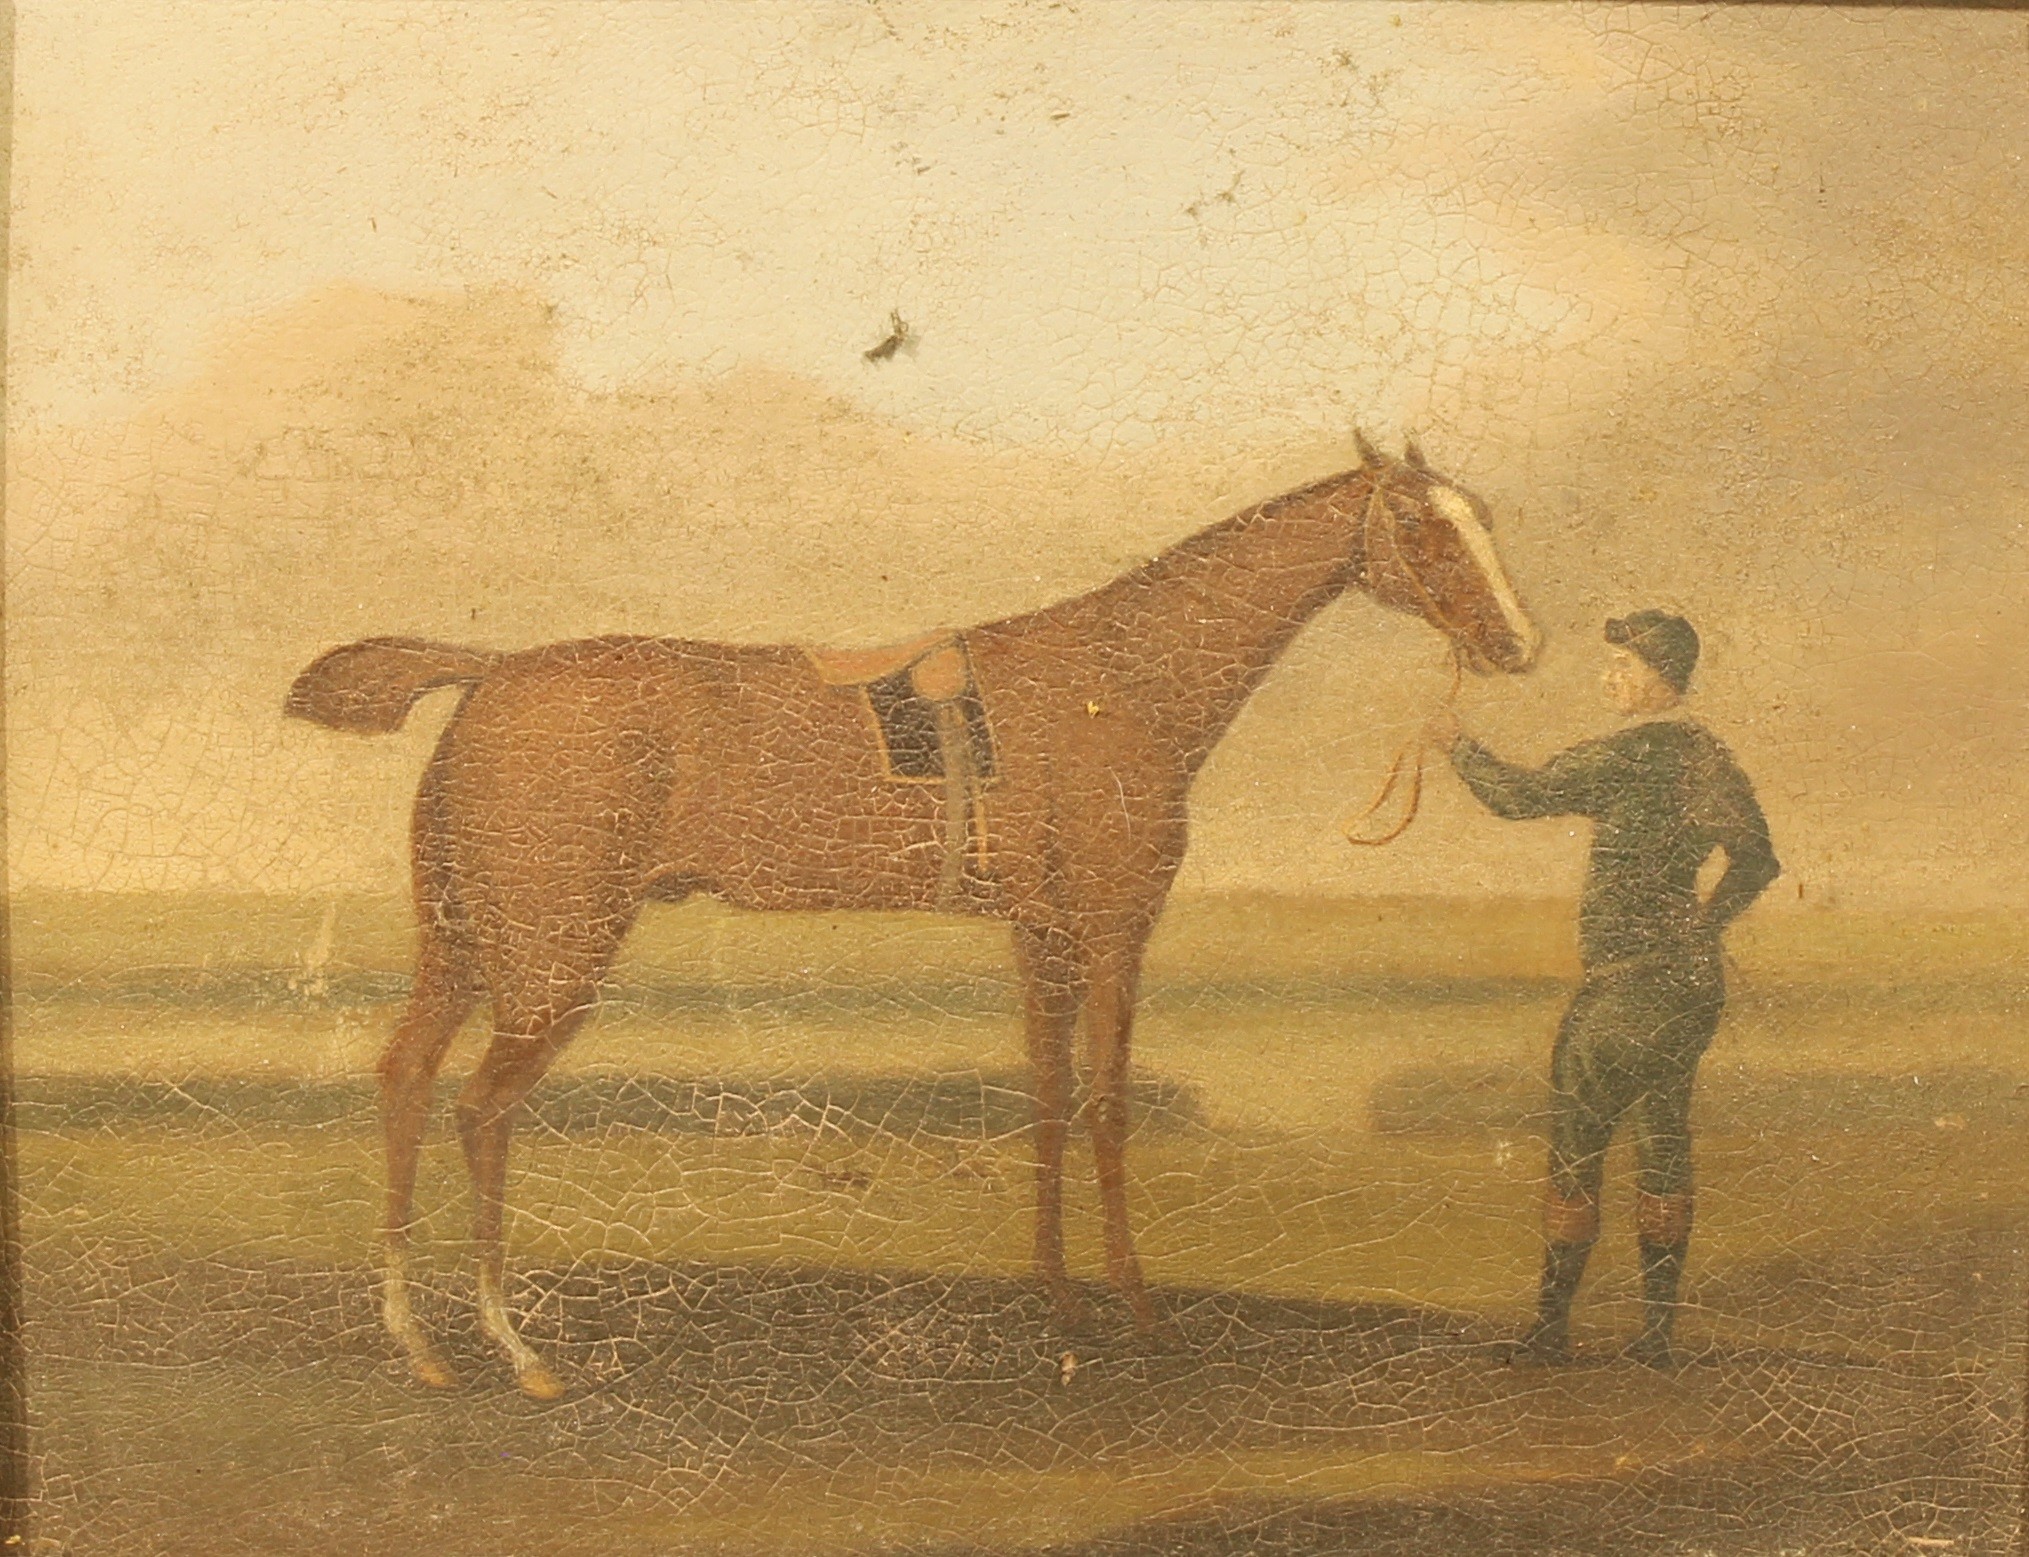 English School (19th century) A Journeyman Equestrian Portrait, Horse and Jockey oil on panel, 16.